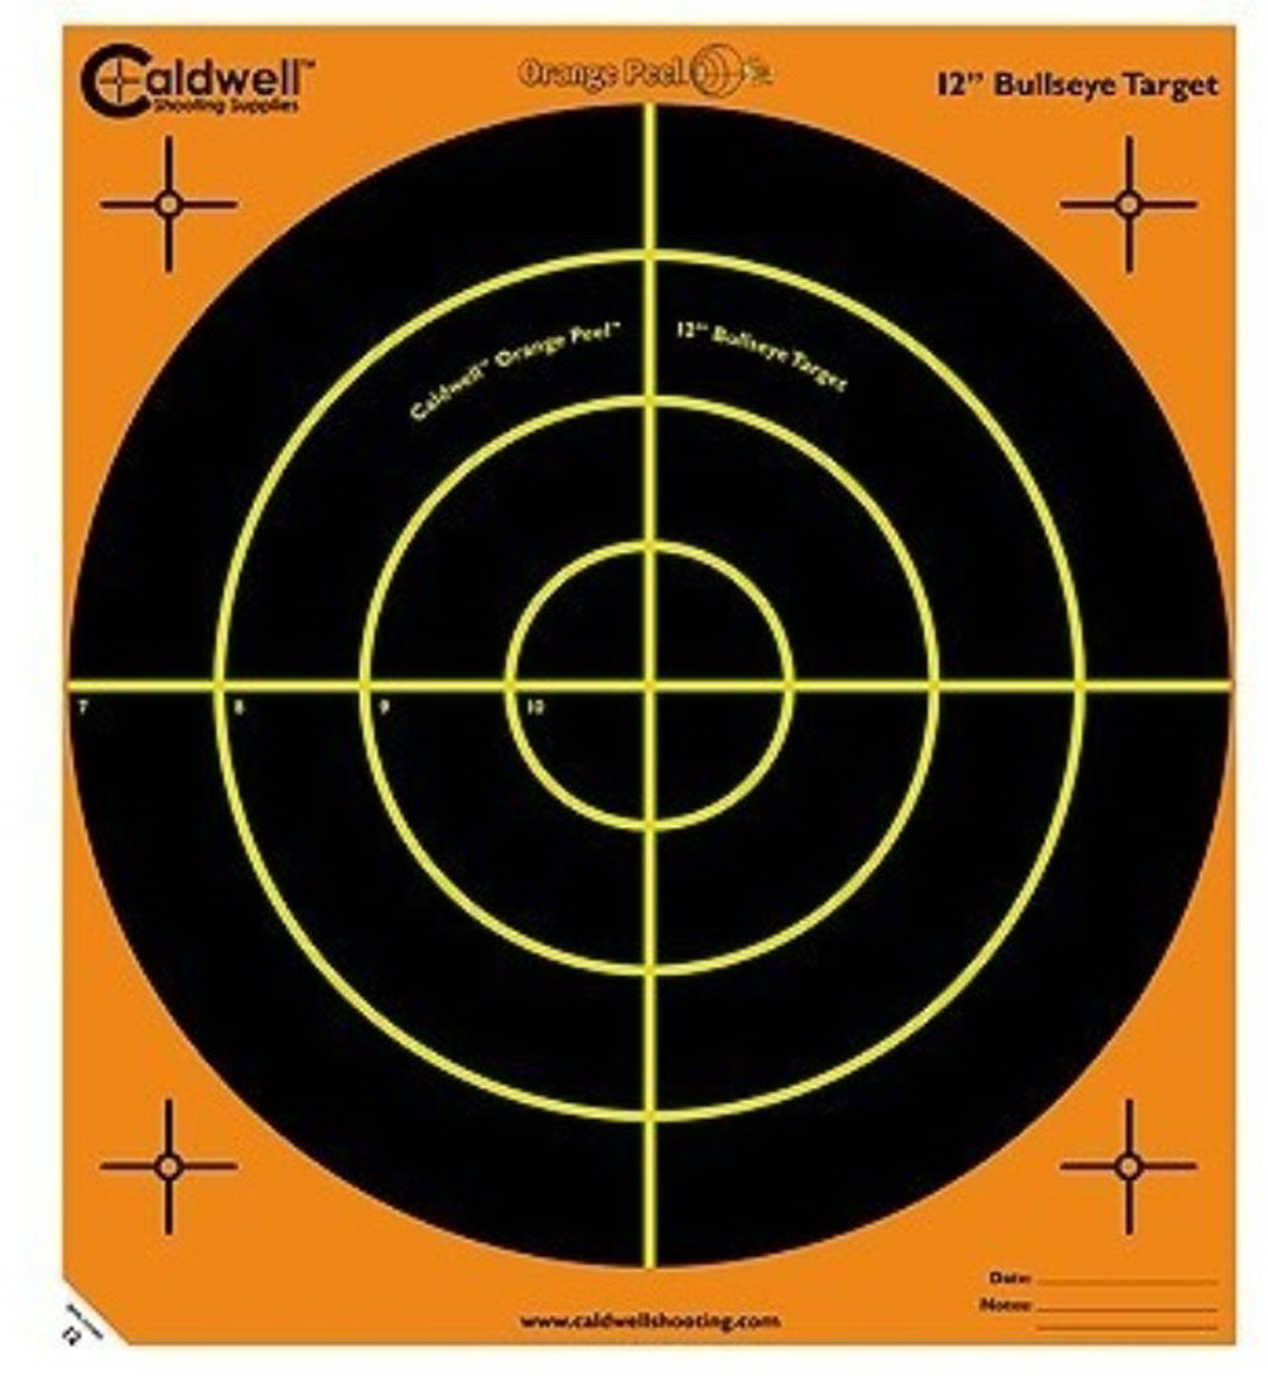 Caldwell 120556 Orange Peel Self-Adhesive Paper 12" Bullseye Orange/Black 5 Pack